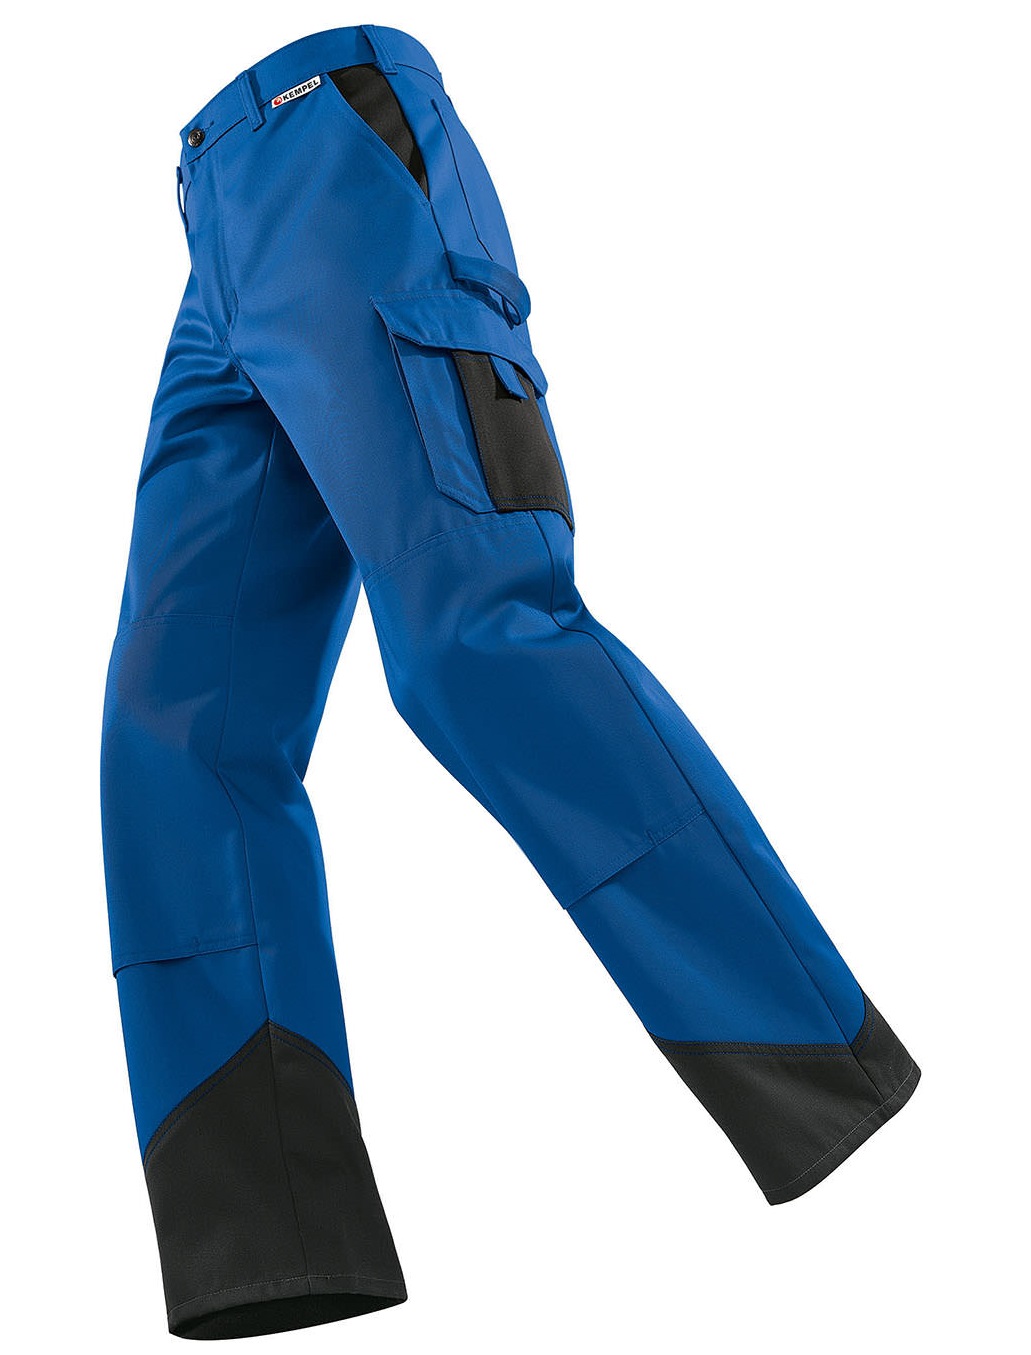 KEMPEL Bundhose Arbeitshose Berufshose Workerhose Arbeitskleidung Berufskleidung kornblau anthrazit ca 325g